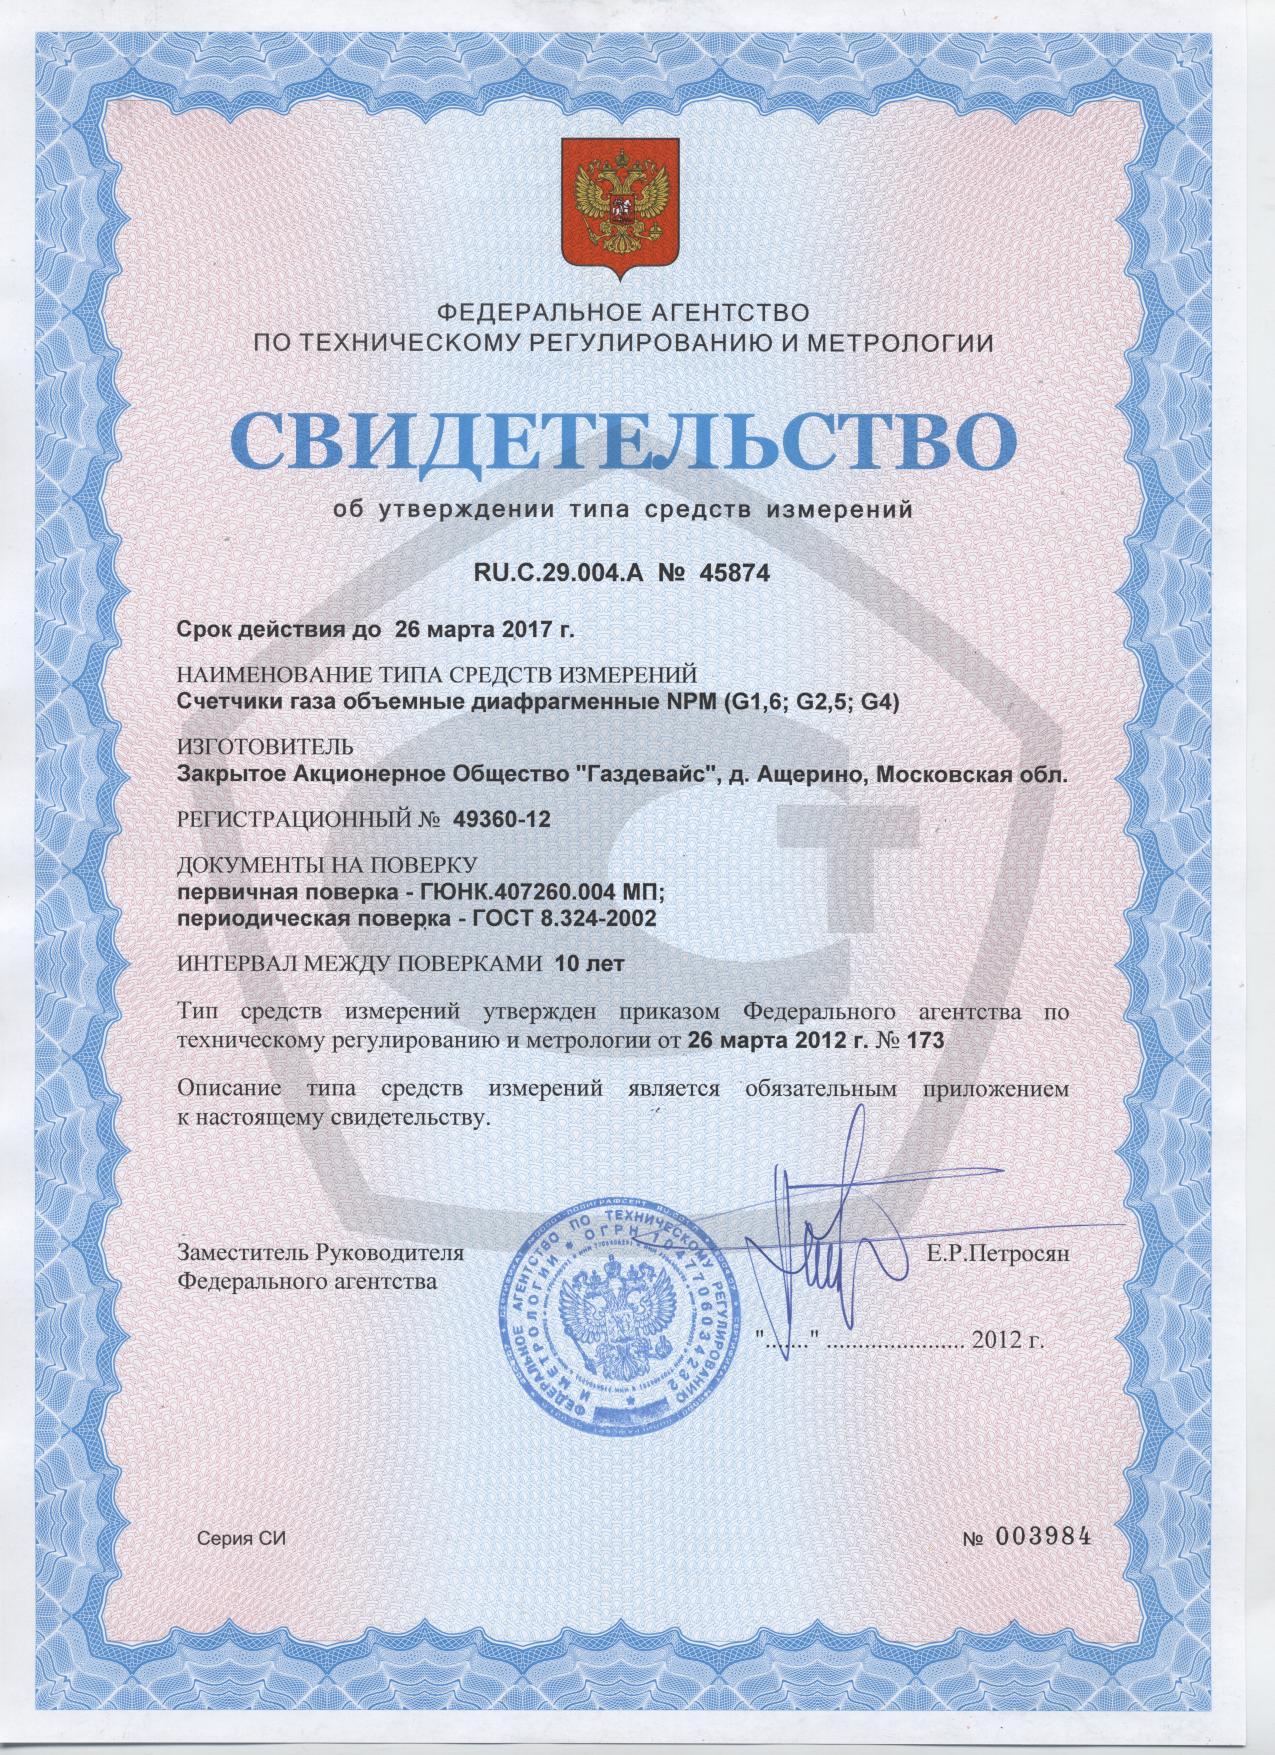 Сертификат счетчика NPM